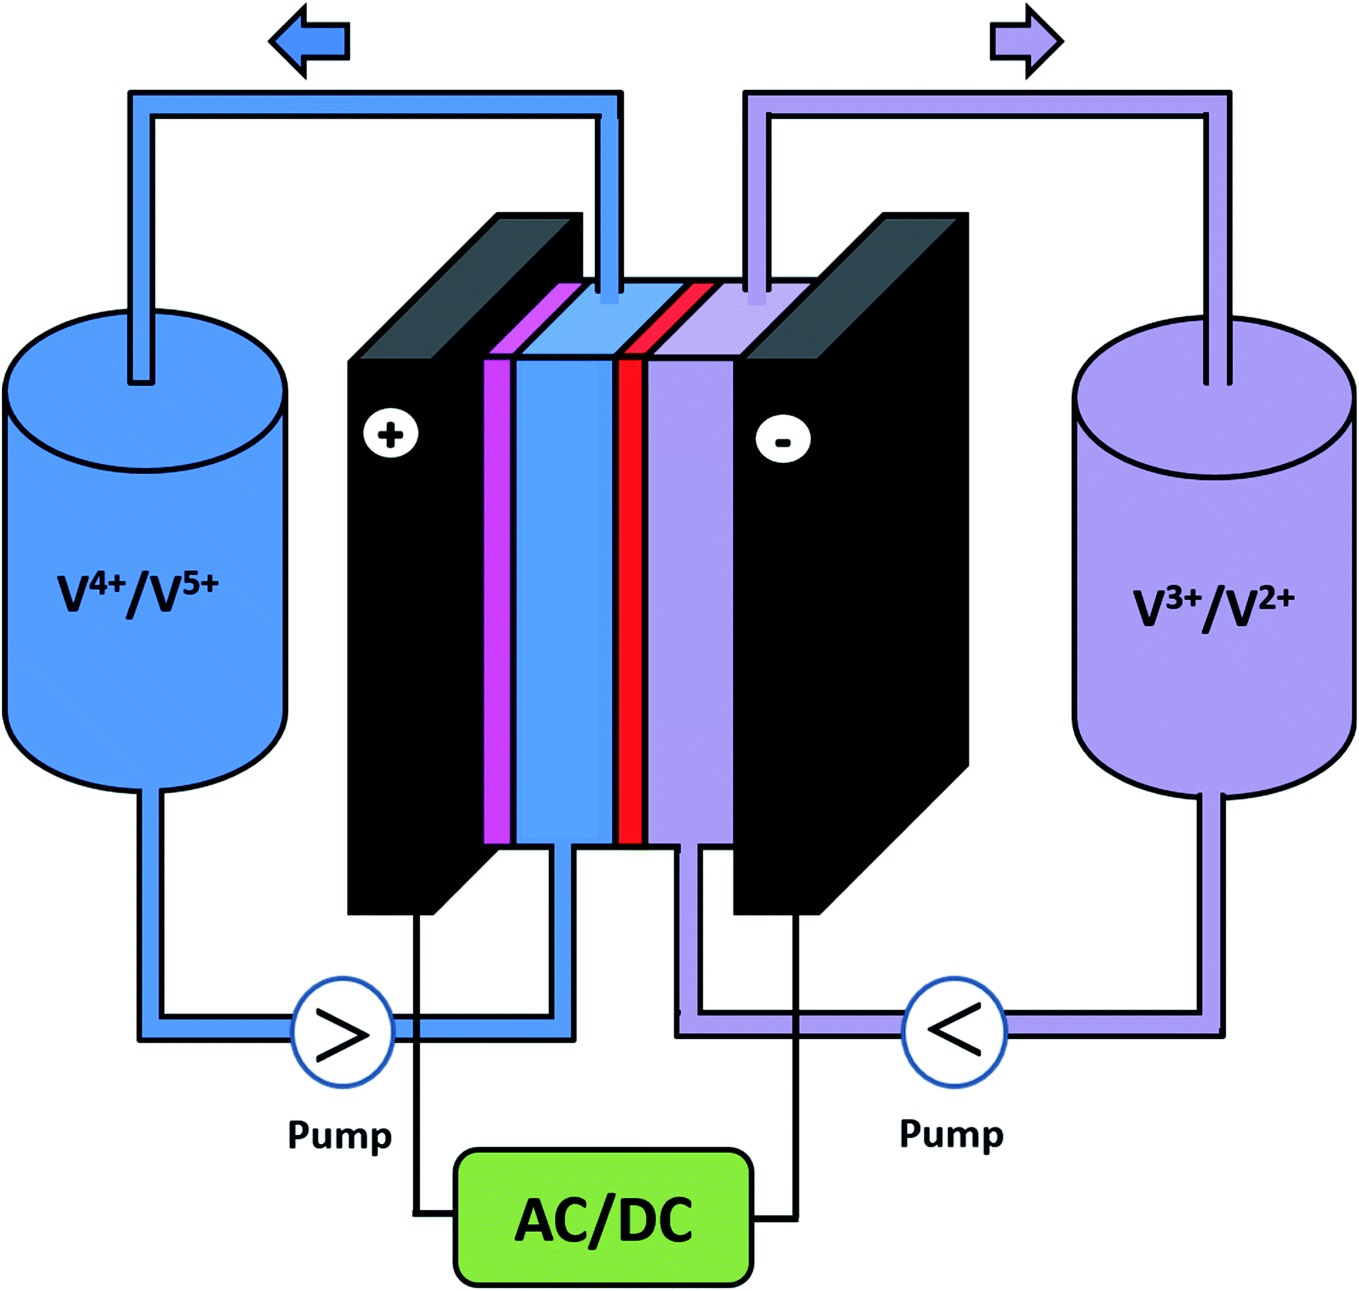 A schematic for a vanadium redox flow battery